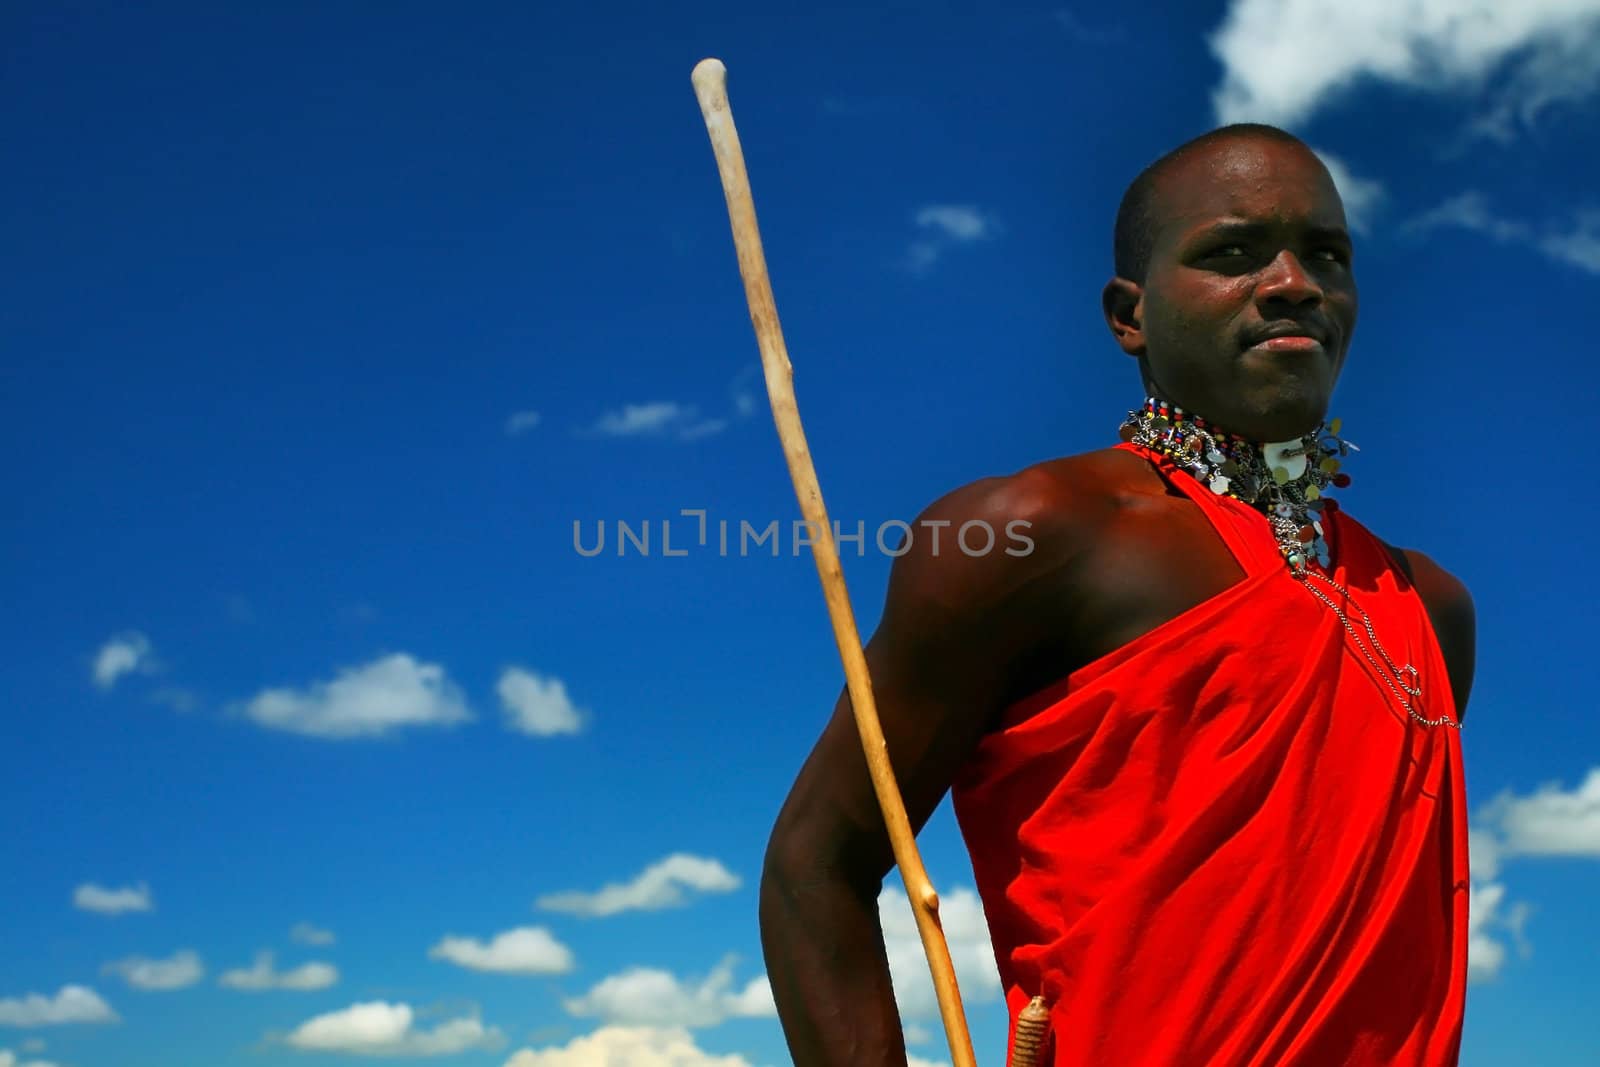 Masai warrior dancing traditional dance by Anna_Omelchenko